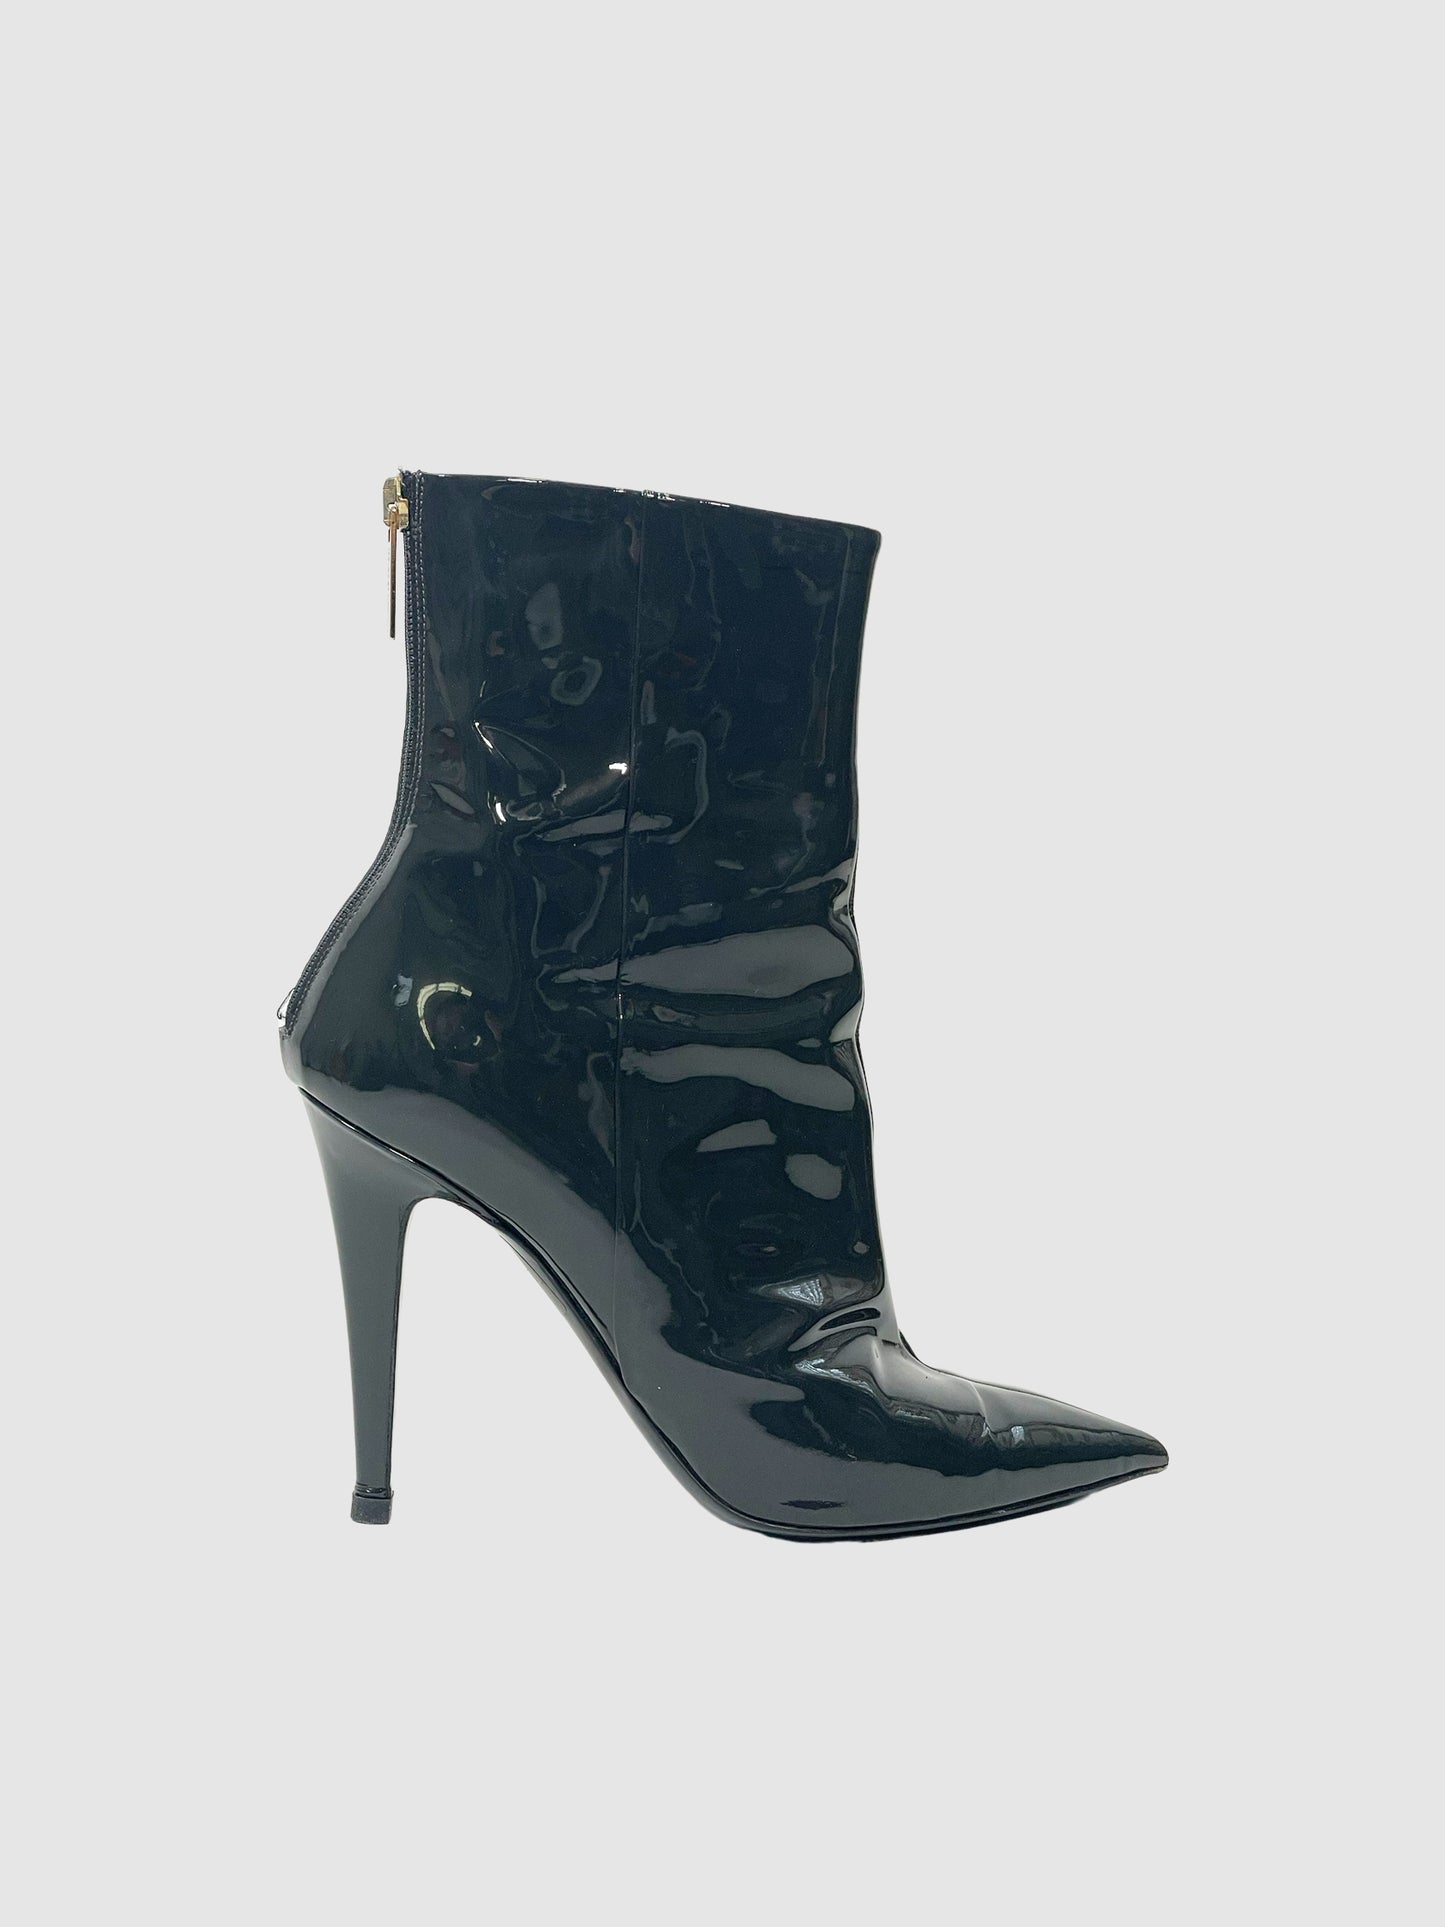 Tamara Mellon Patent Leather Stiletto Boots - Size 38.5